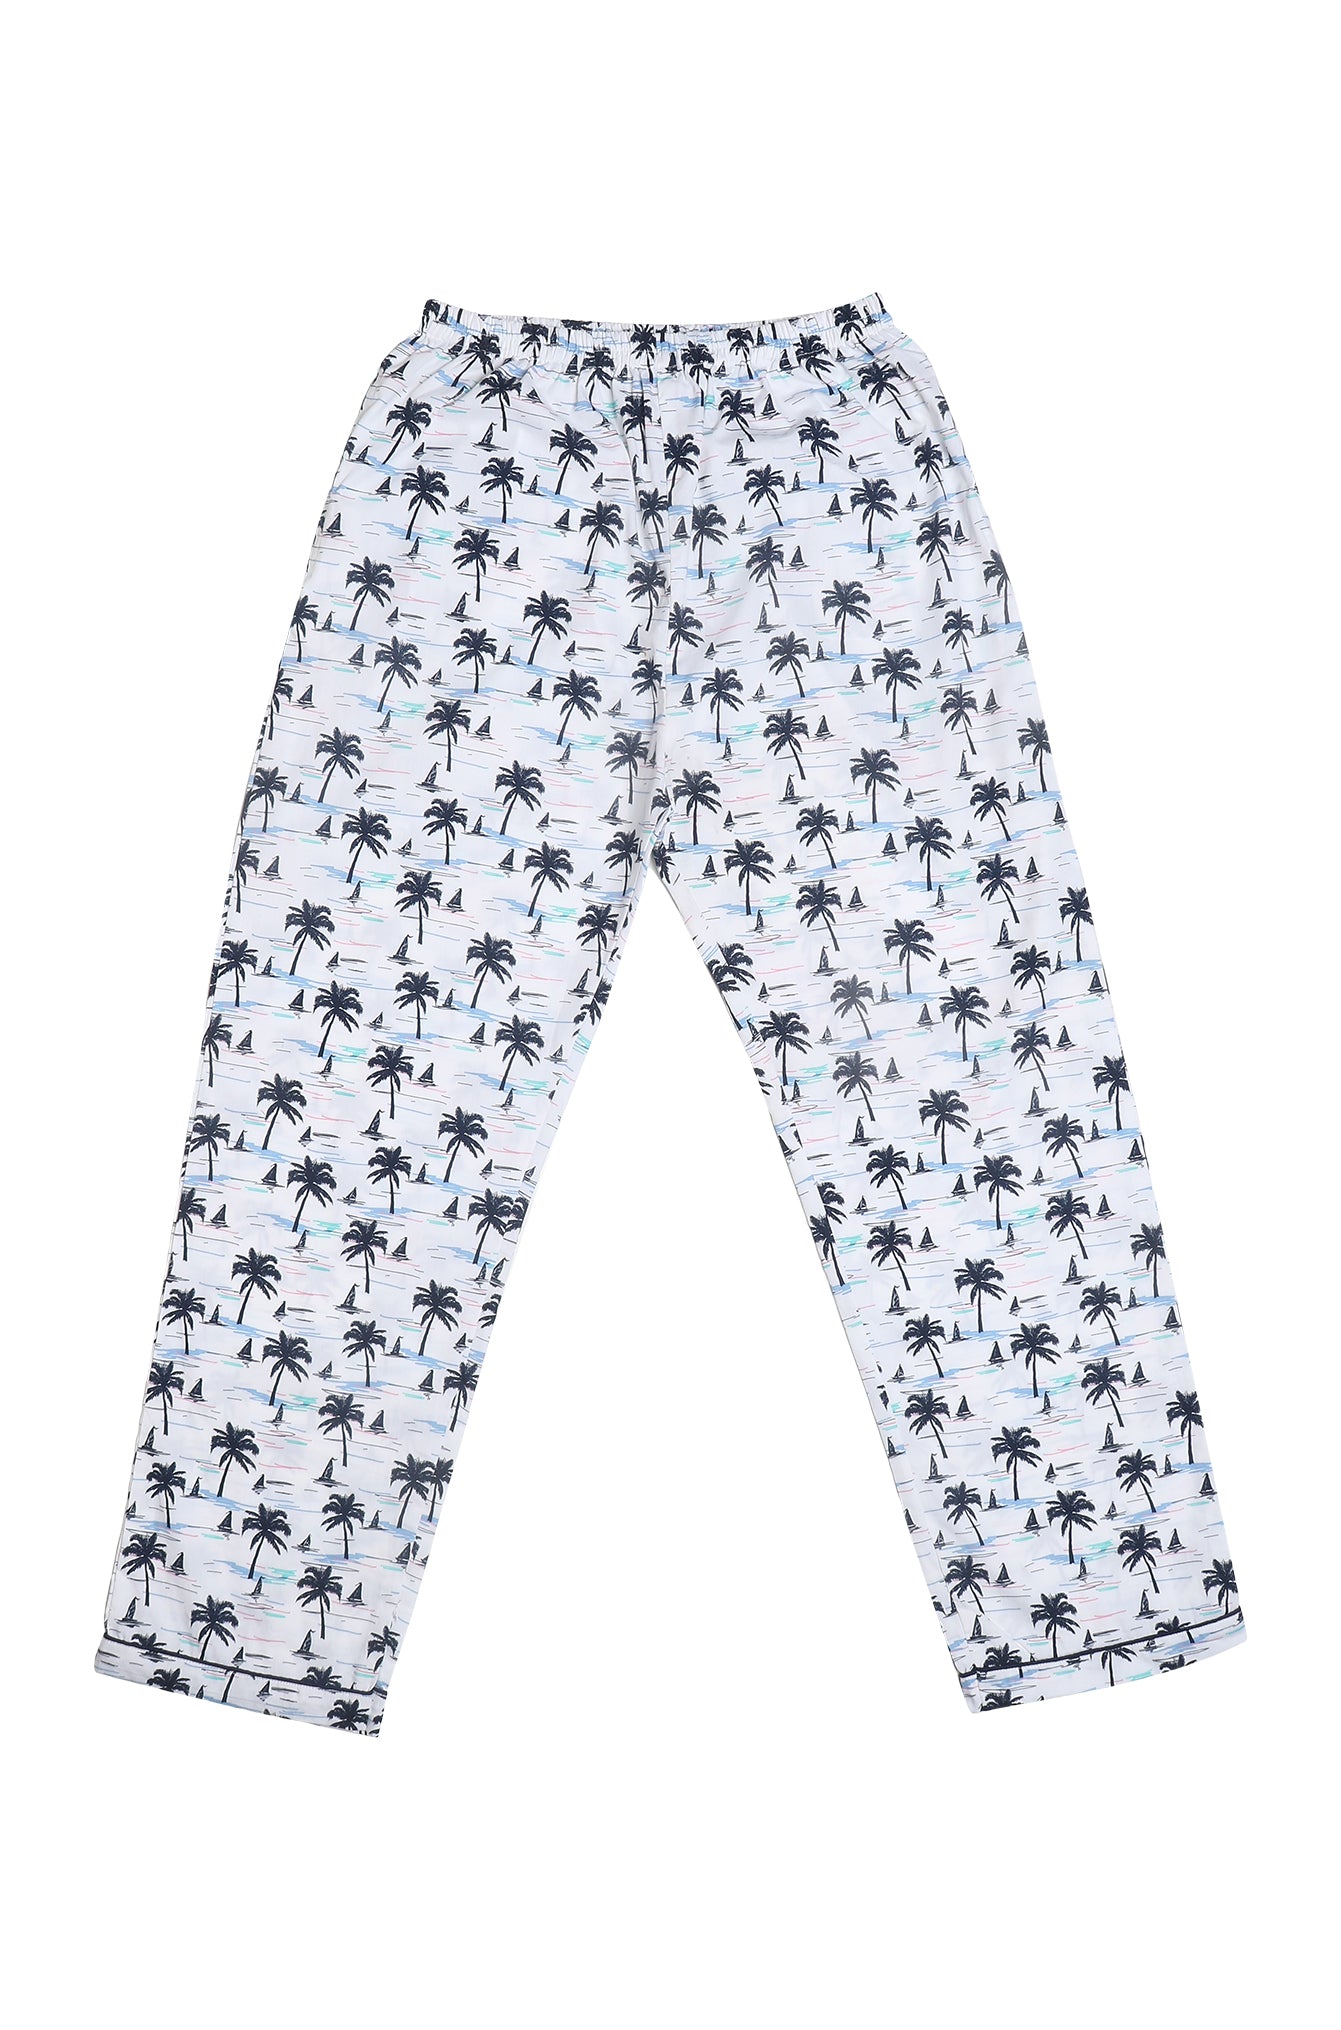 Single Pyjama (AA) [Buy 1 Get 1 Free]